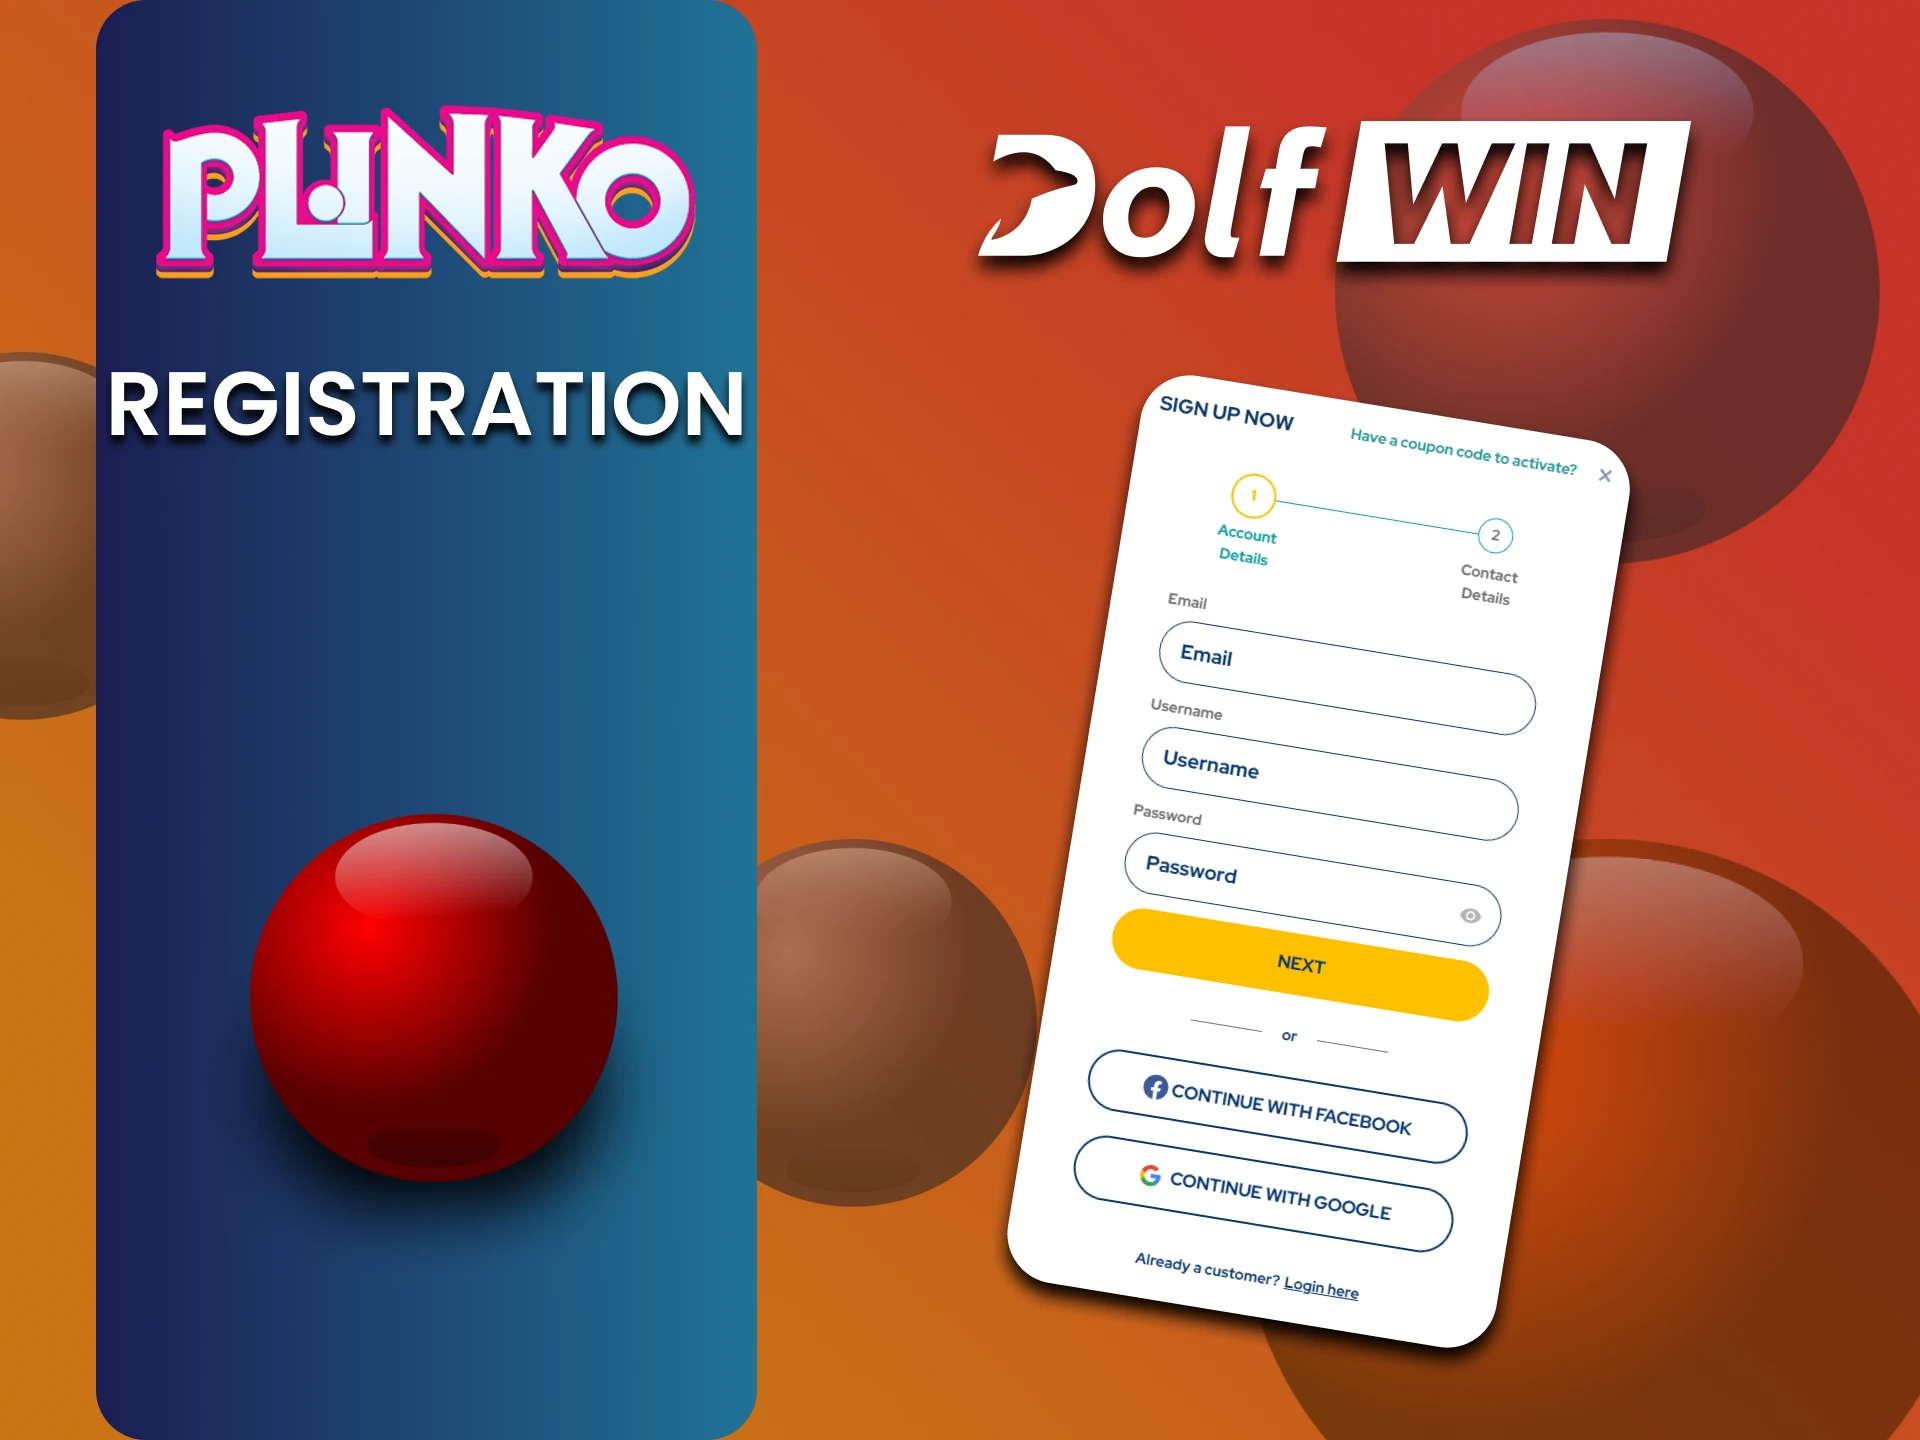 To play Plinko, register on Dolfwin.